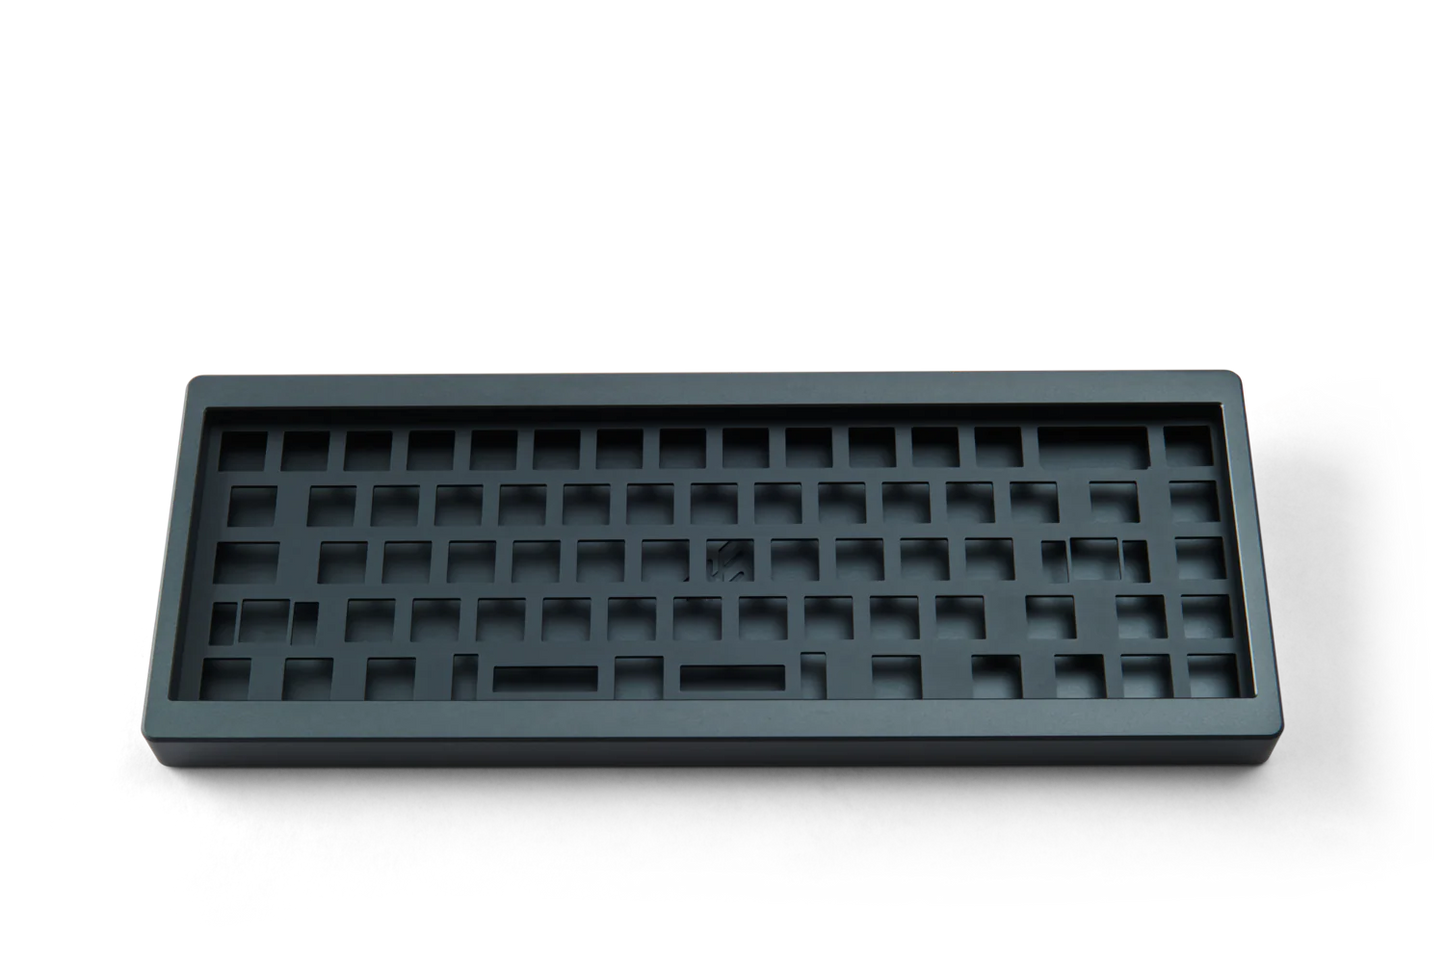 Satellite Keyboard (Full Kit - Case, PCB, Plate + Stabs)